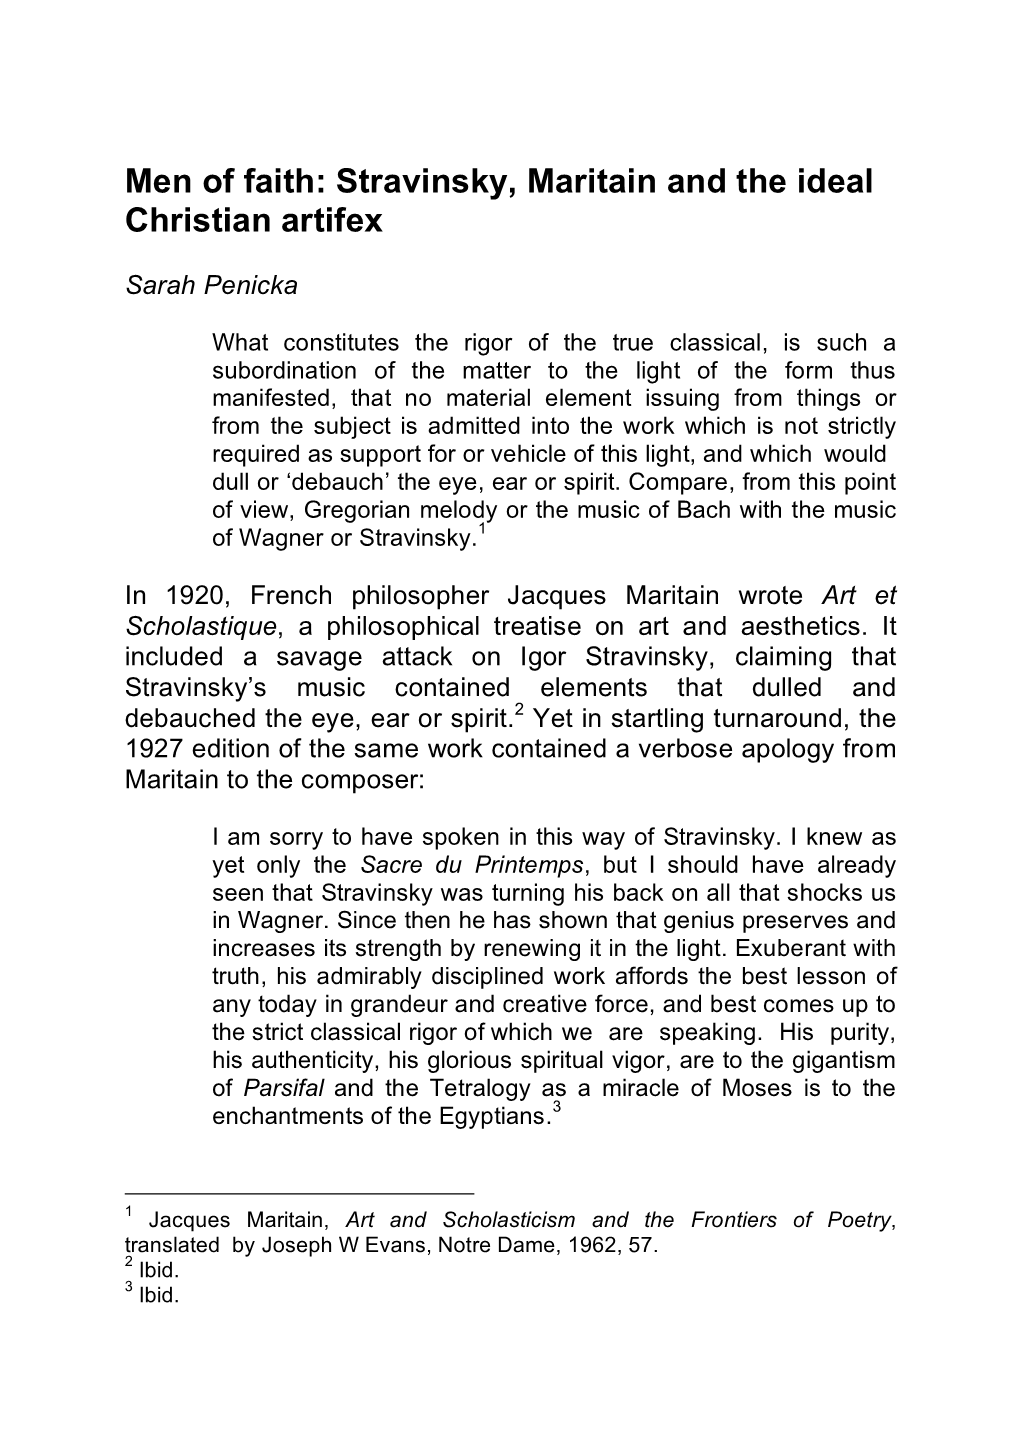 Men of Faith: Stravinsky, Maritain and the Ideal Christian Artifex